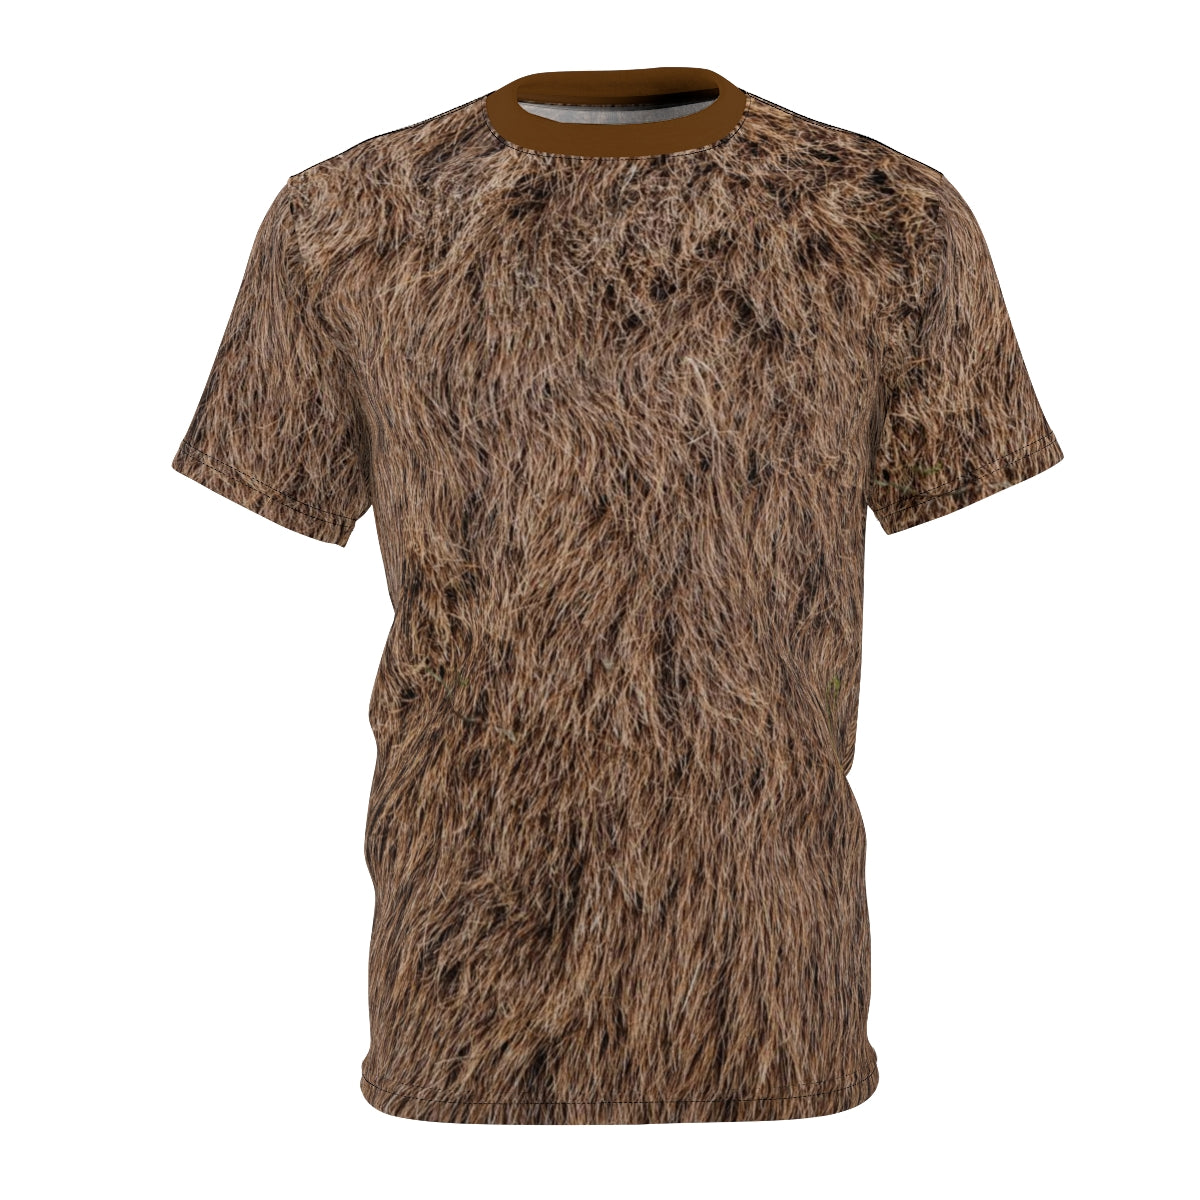 Brown Fur Print Shirt